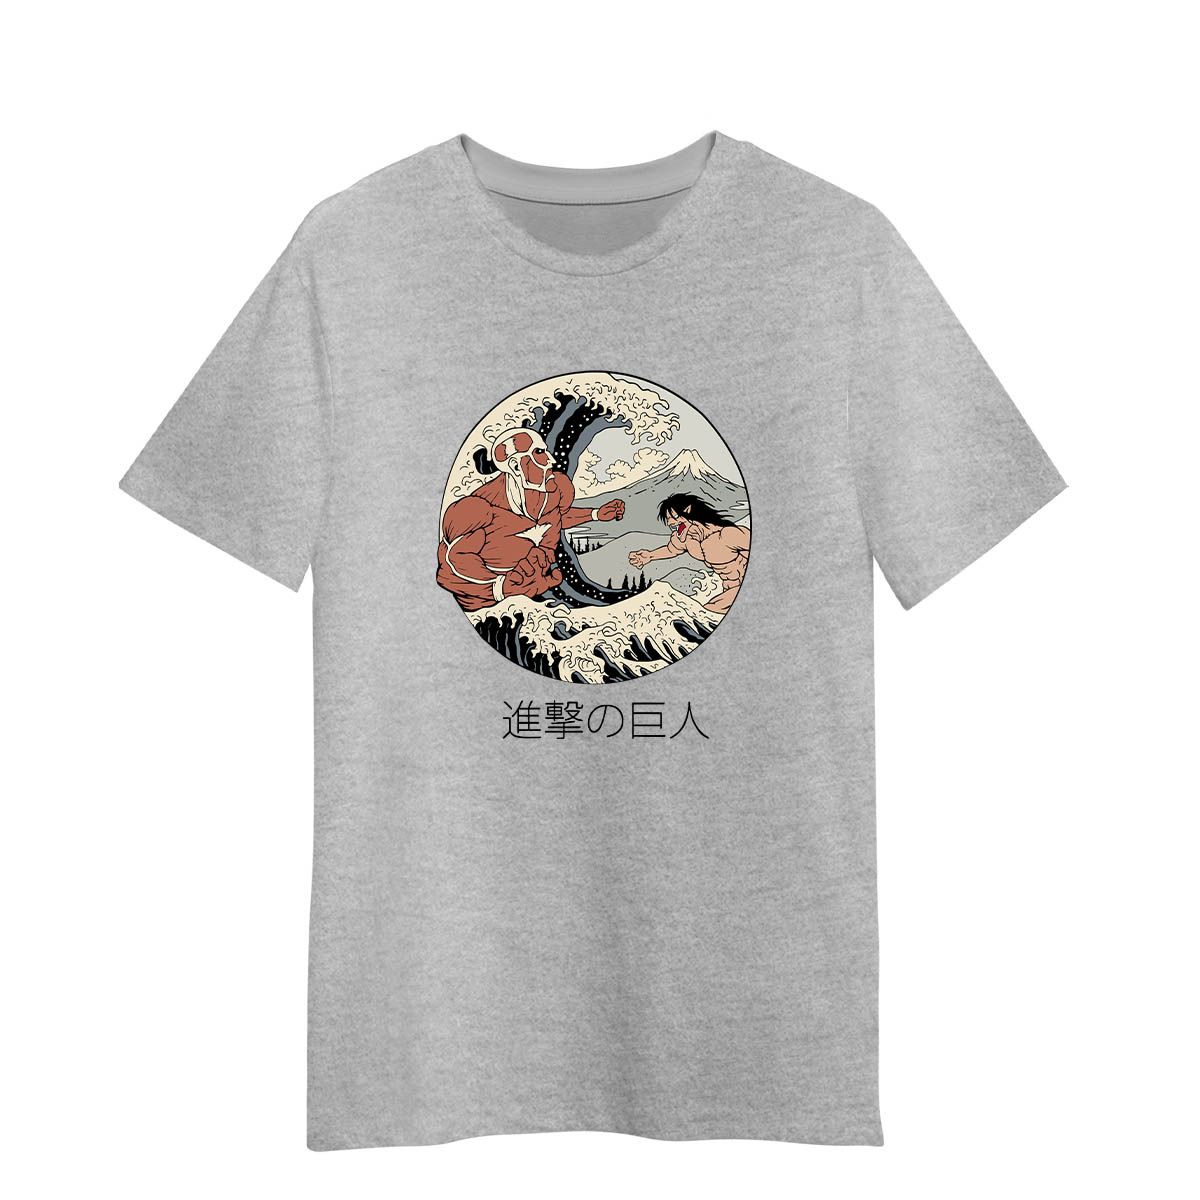 My Hero Academia Japanese Anime Adult Unisex Grey T-shirt